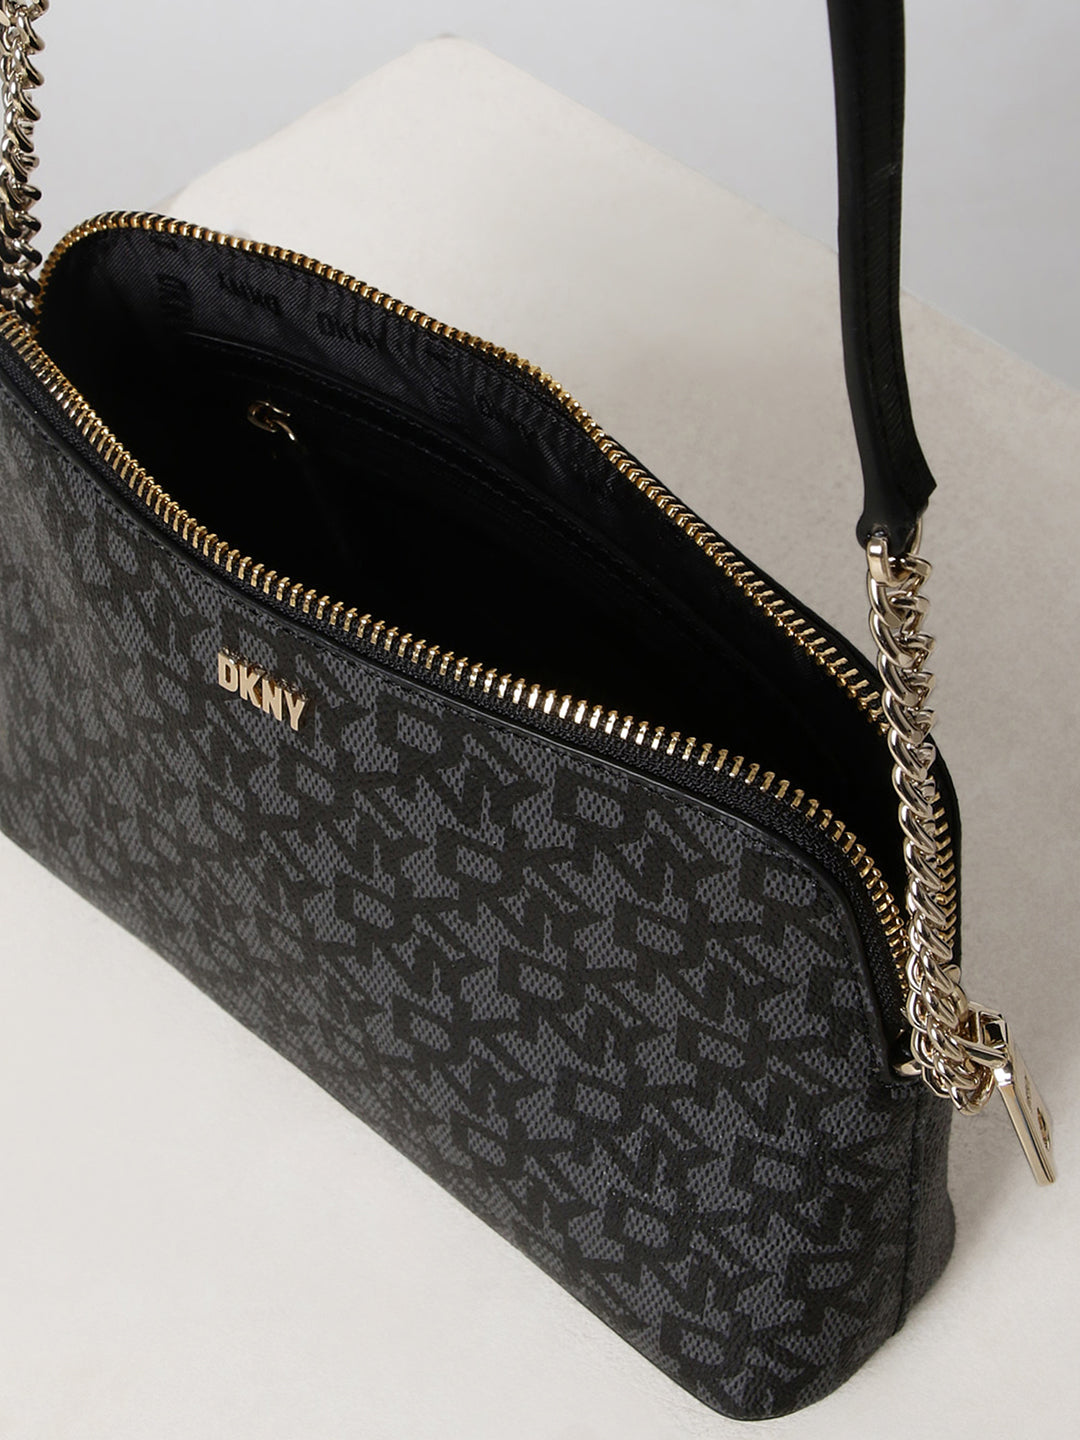 DKNY#2503 Large Purse Handbag Black Saffiano Leather Shoulder Bag Crossbody  | eBay